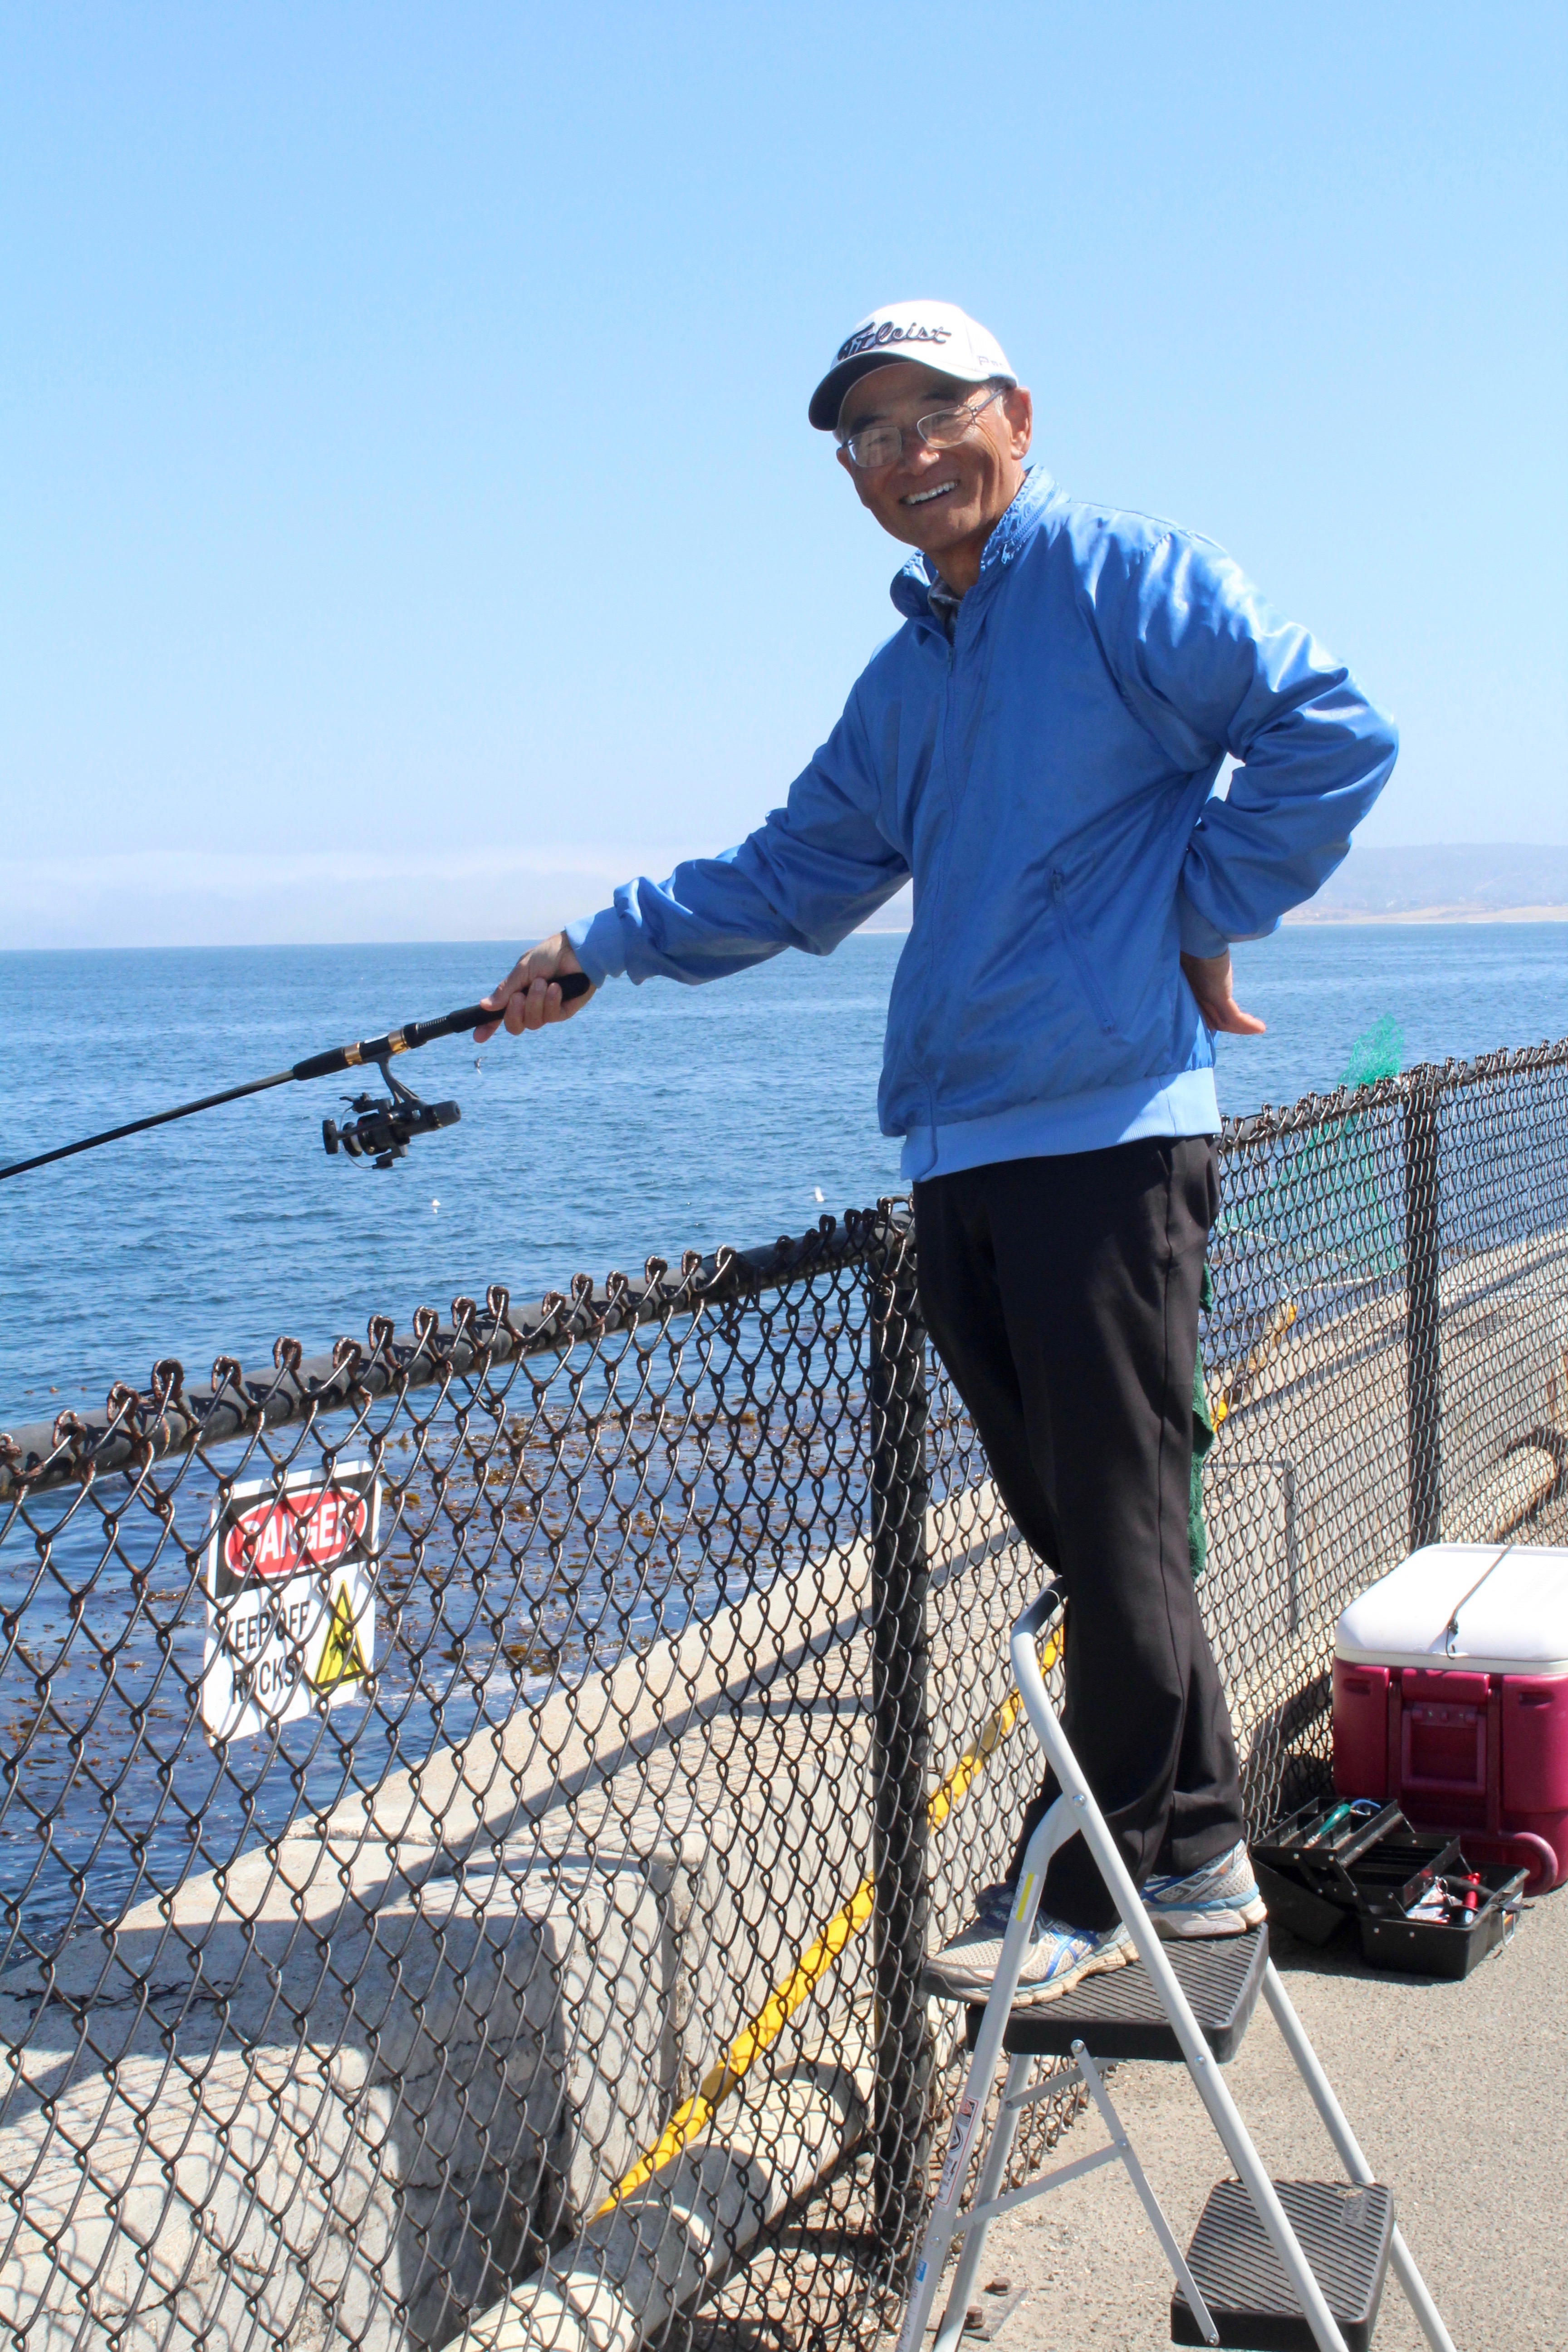 Jetty / Pier fishing